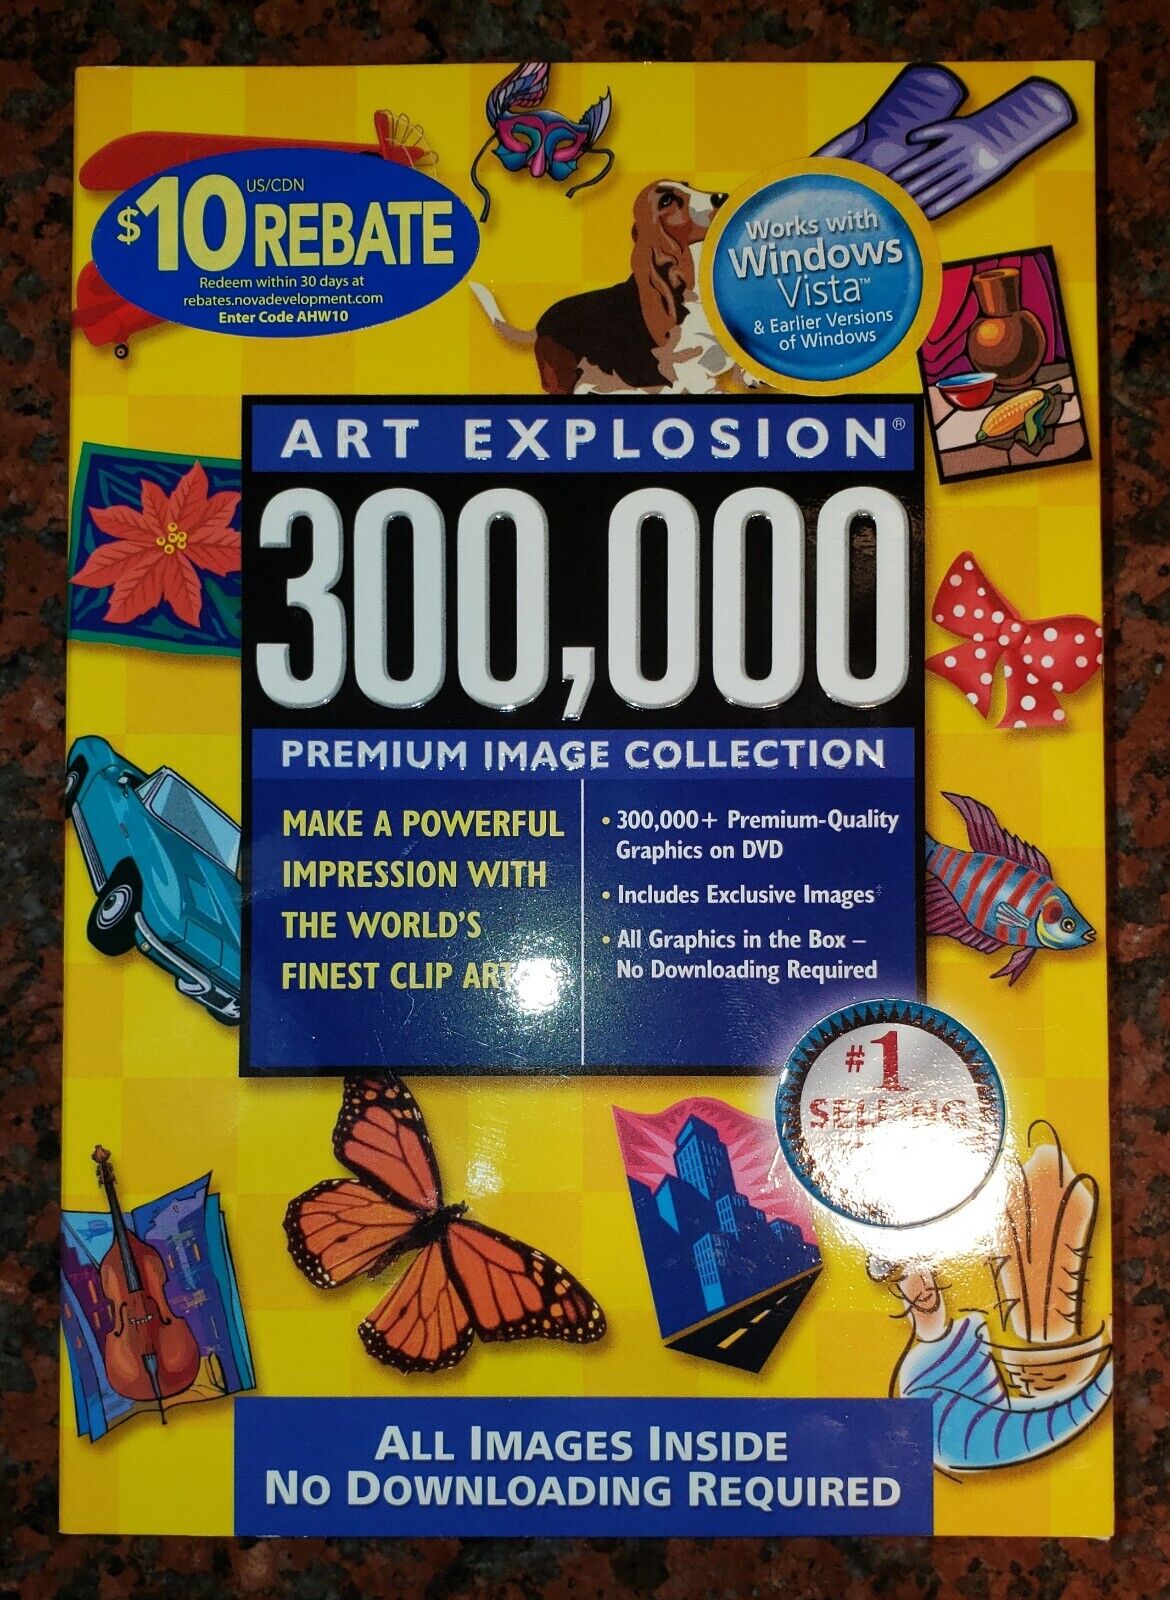 Nova Development Art Explosion 300,000 Software DVD Premium Image Collection NOS